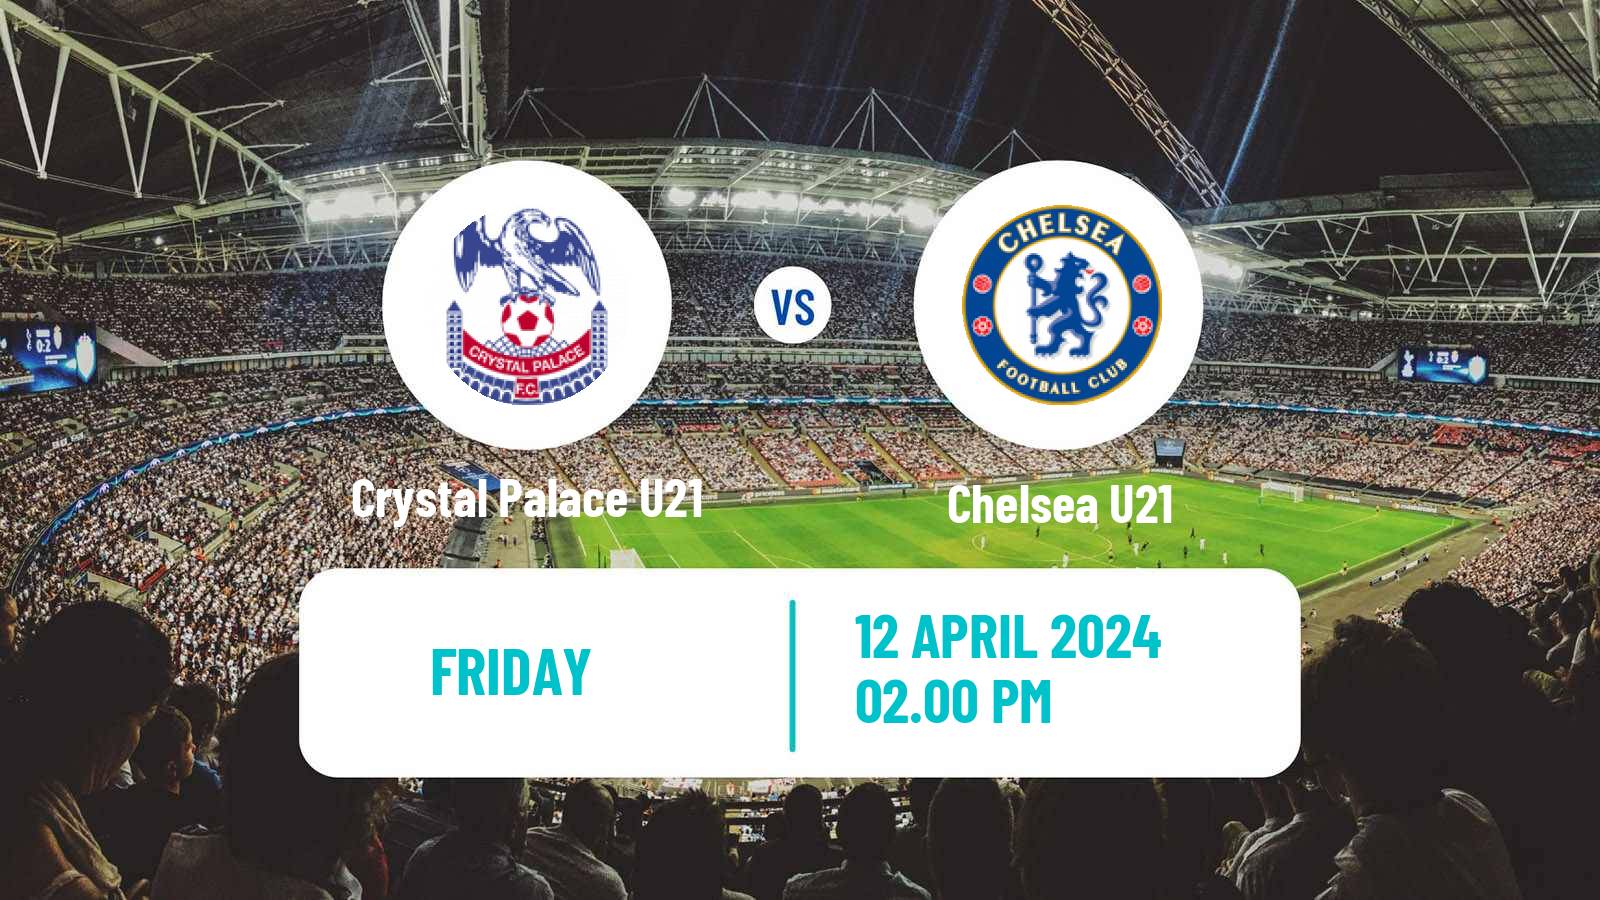 Soccer English Premier League 2 Crystal Palace U21 - Chelsea U21